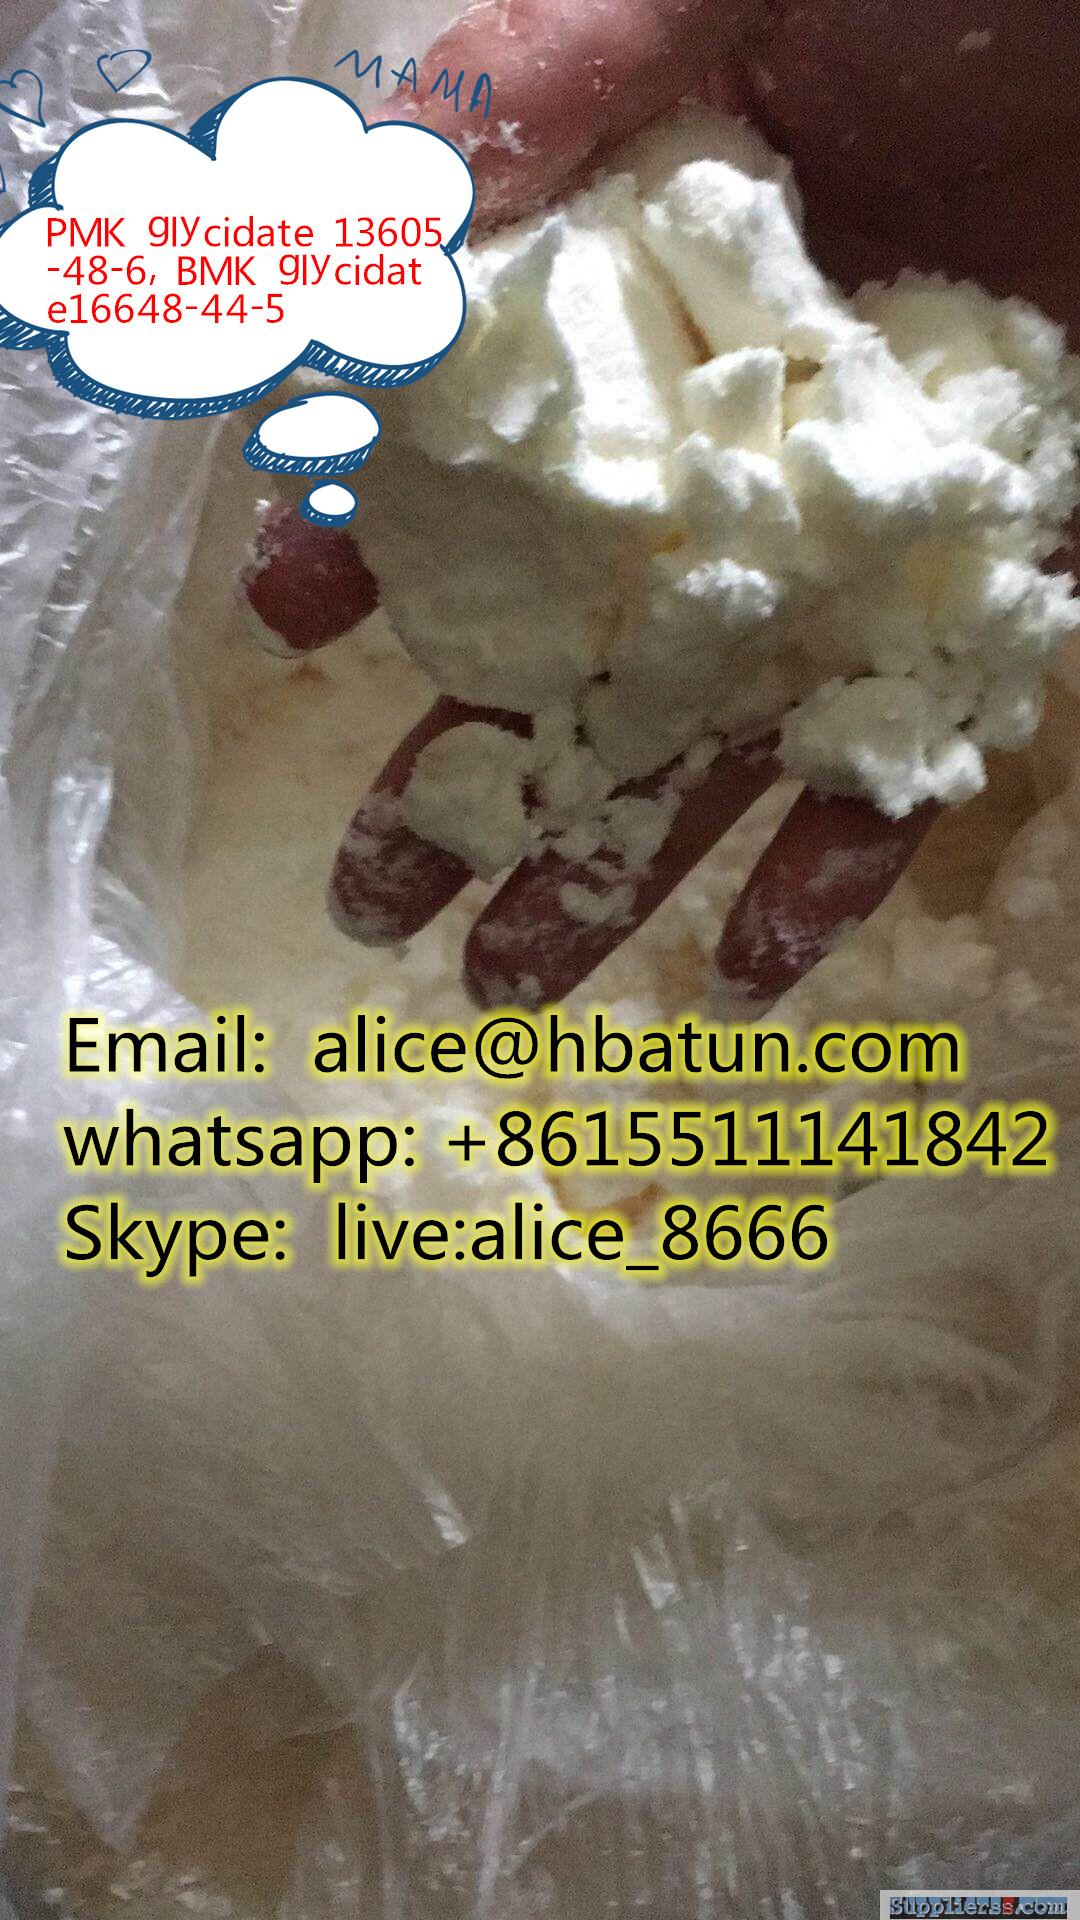 16648-44-5 Bmk-glycidate /p2np/GBL alice@hbatun.com